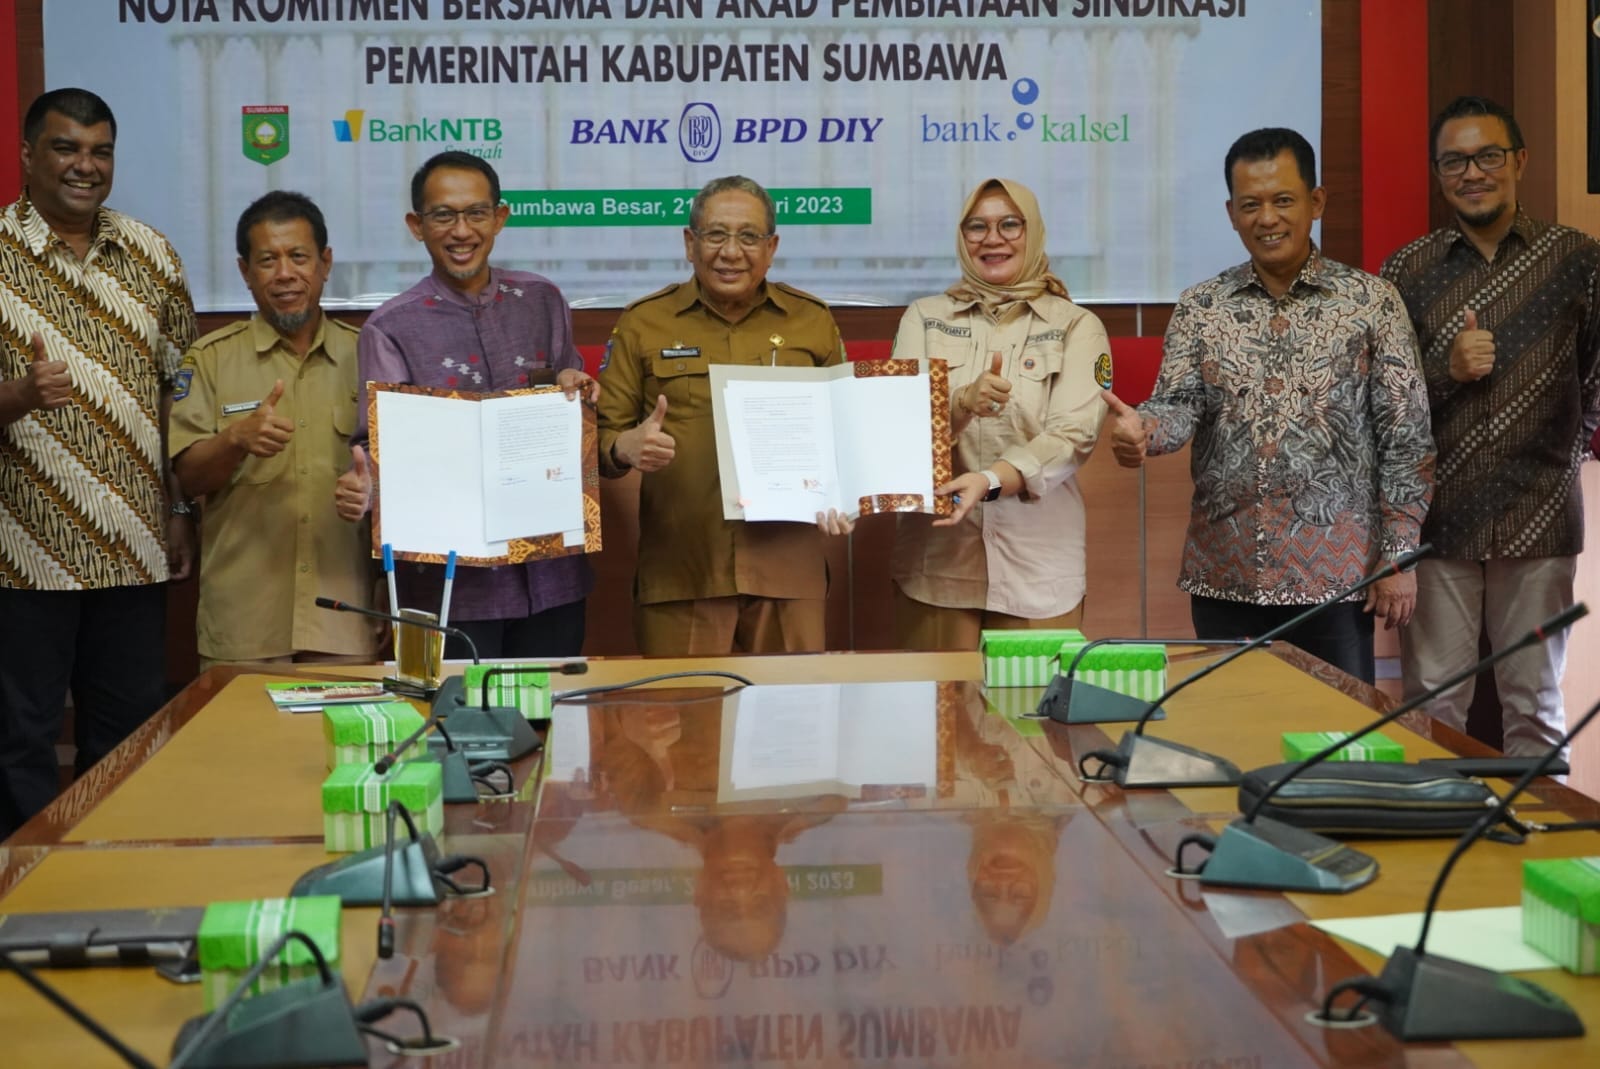 Penandatanganan Nota Komitmen Bersama dan Akad Pembiayaan Sindikasi Kabupaten Sumbawa